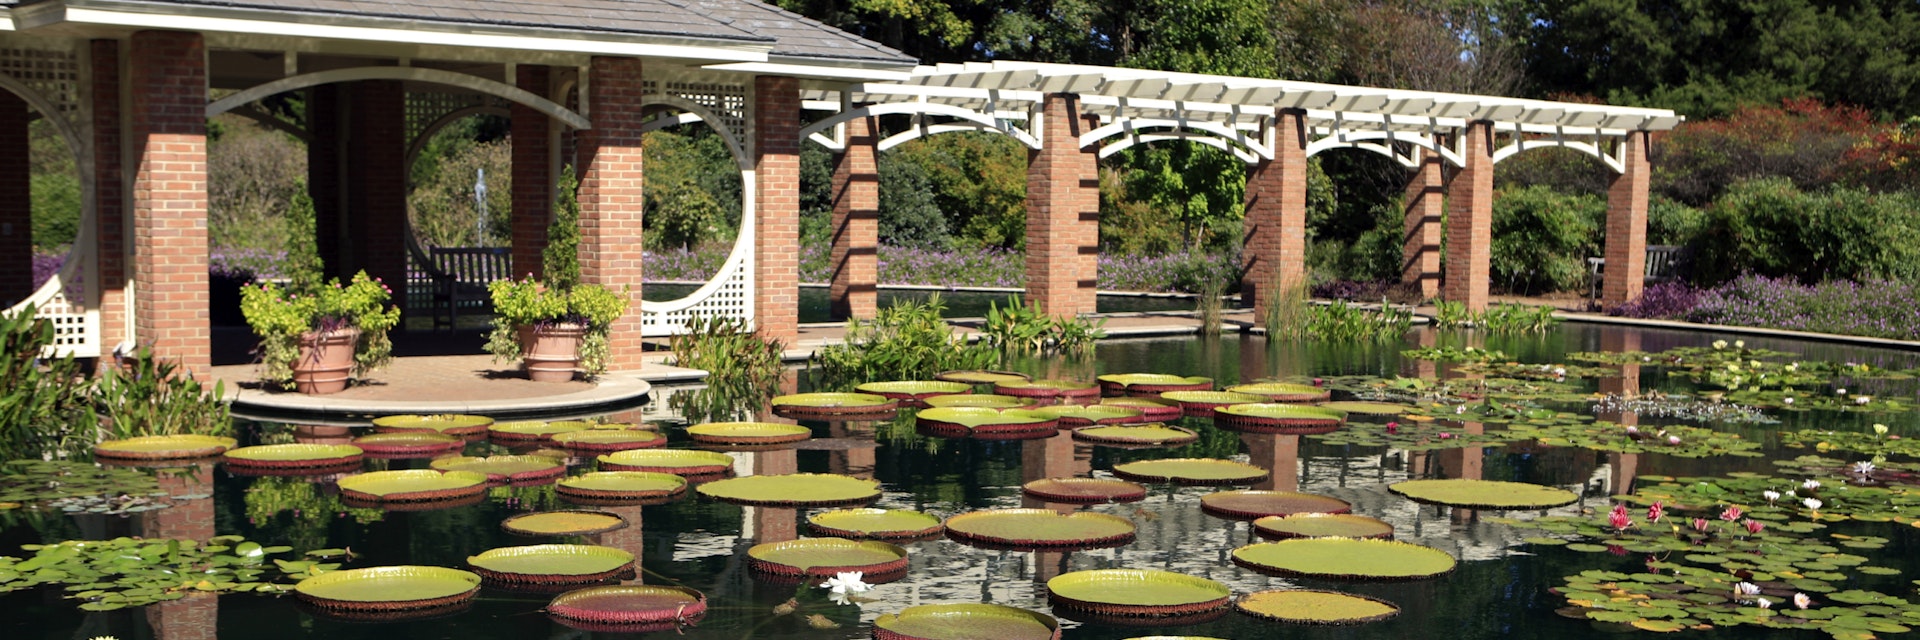 Water Garden at the Huntsville Alabama Botanical Gardens